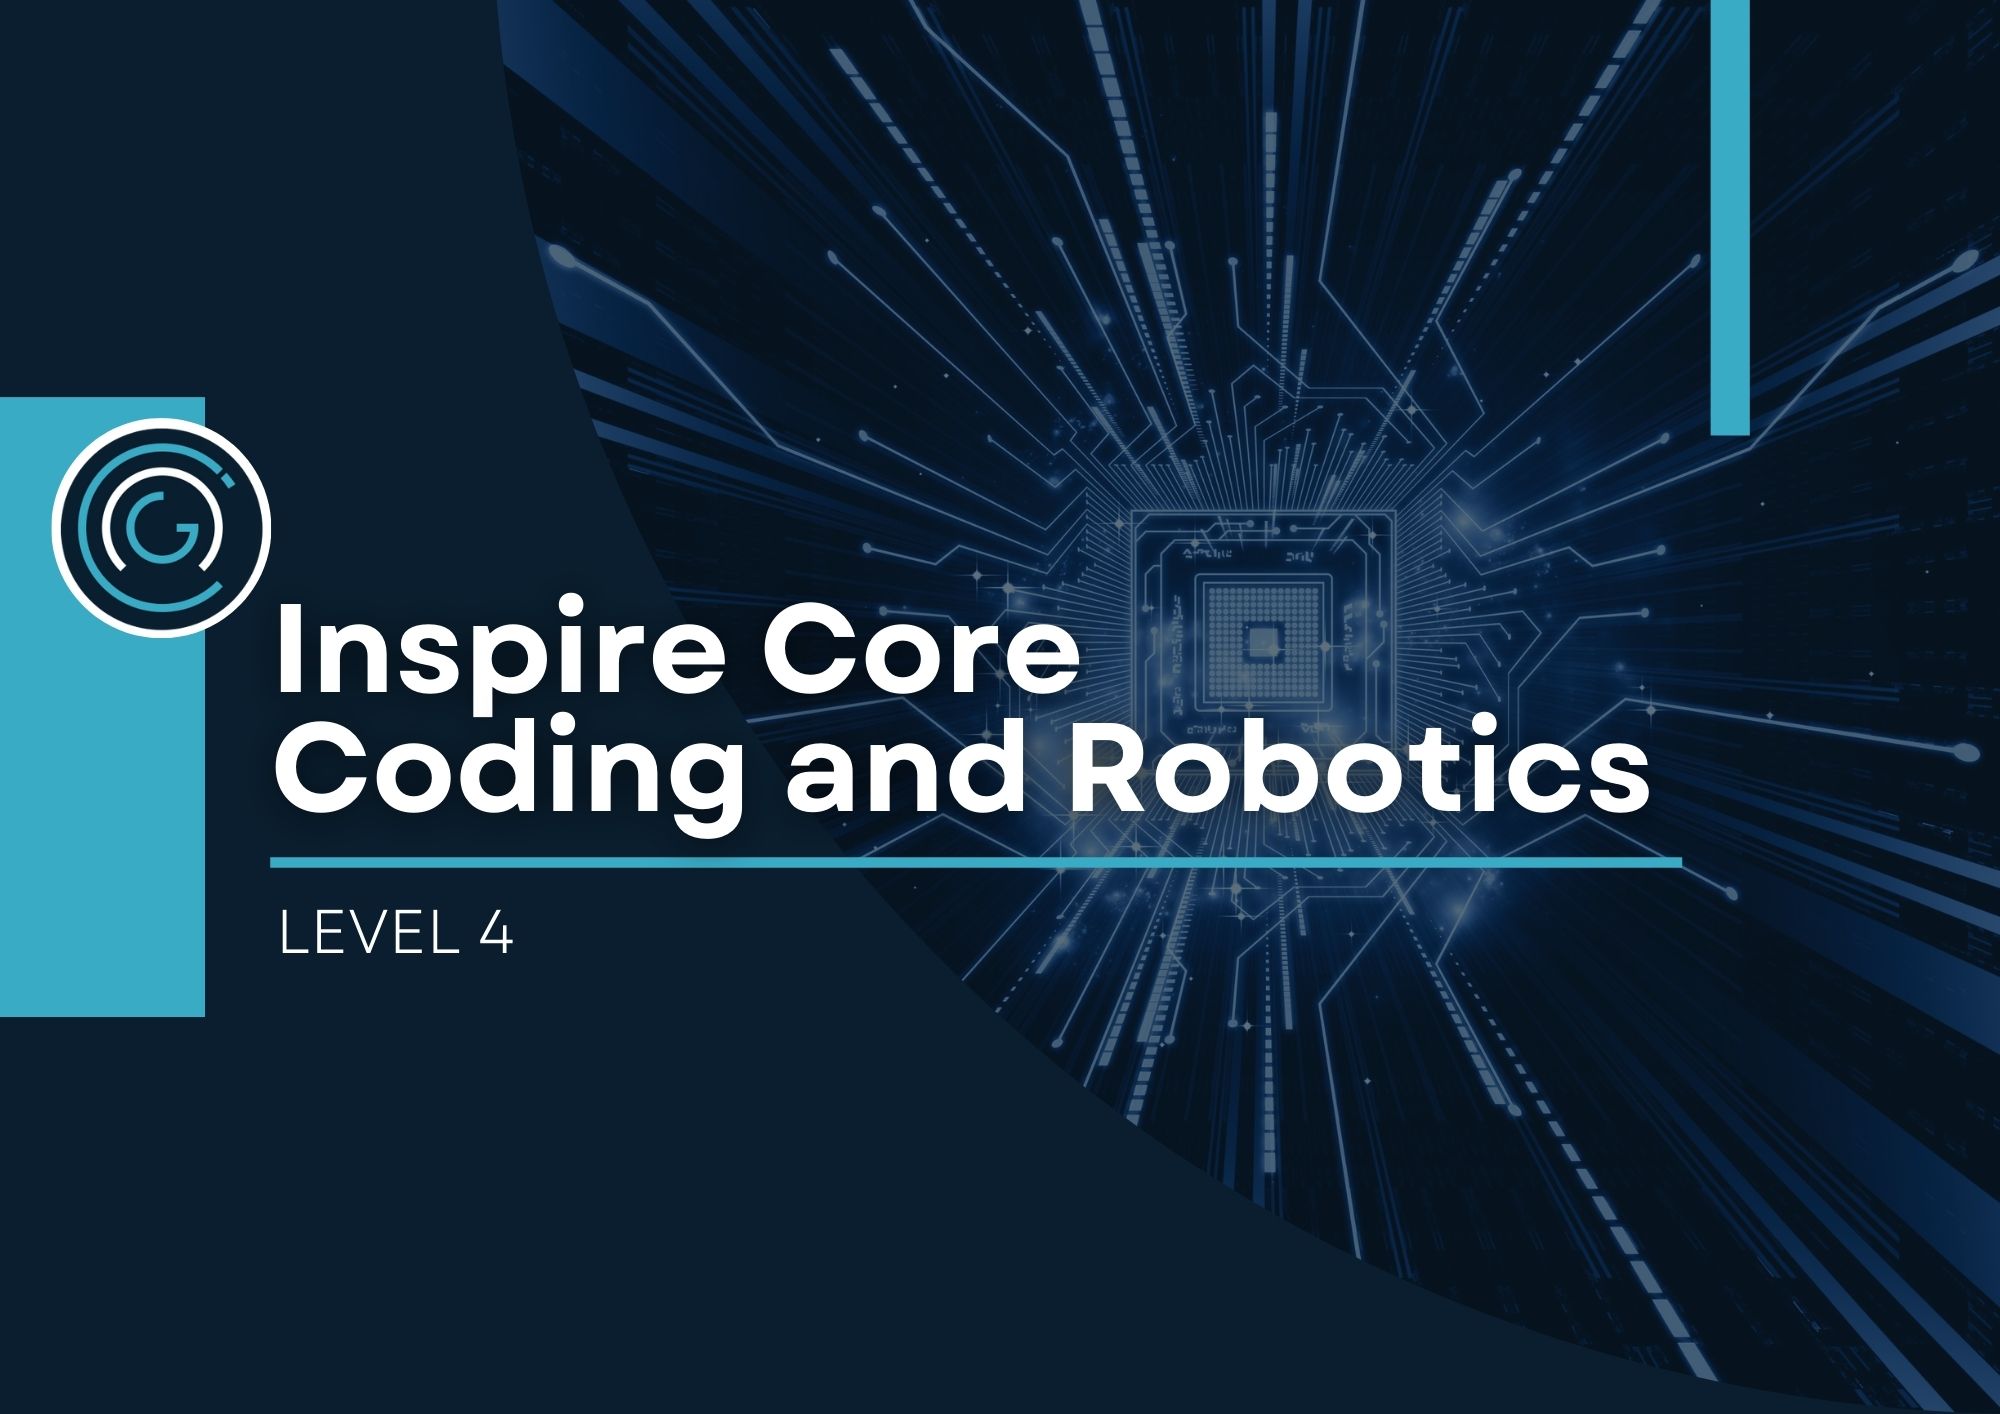 Level 4 Inspire Coding and Robotics